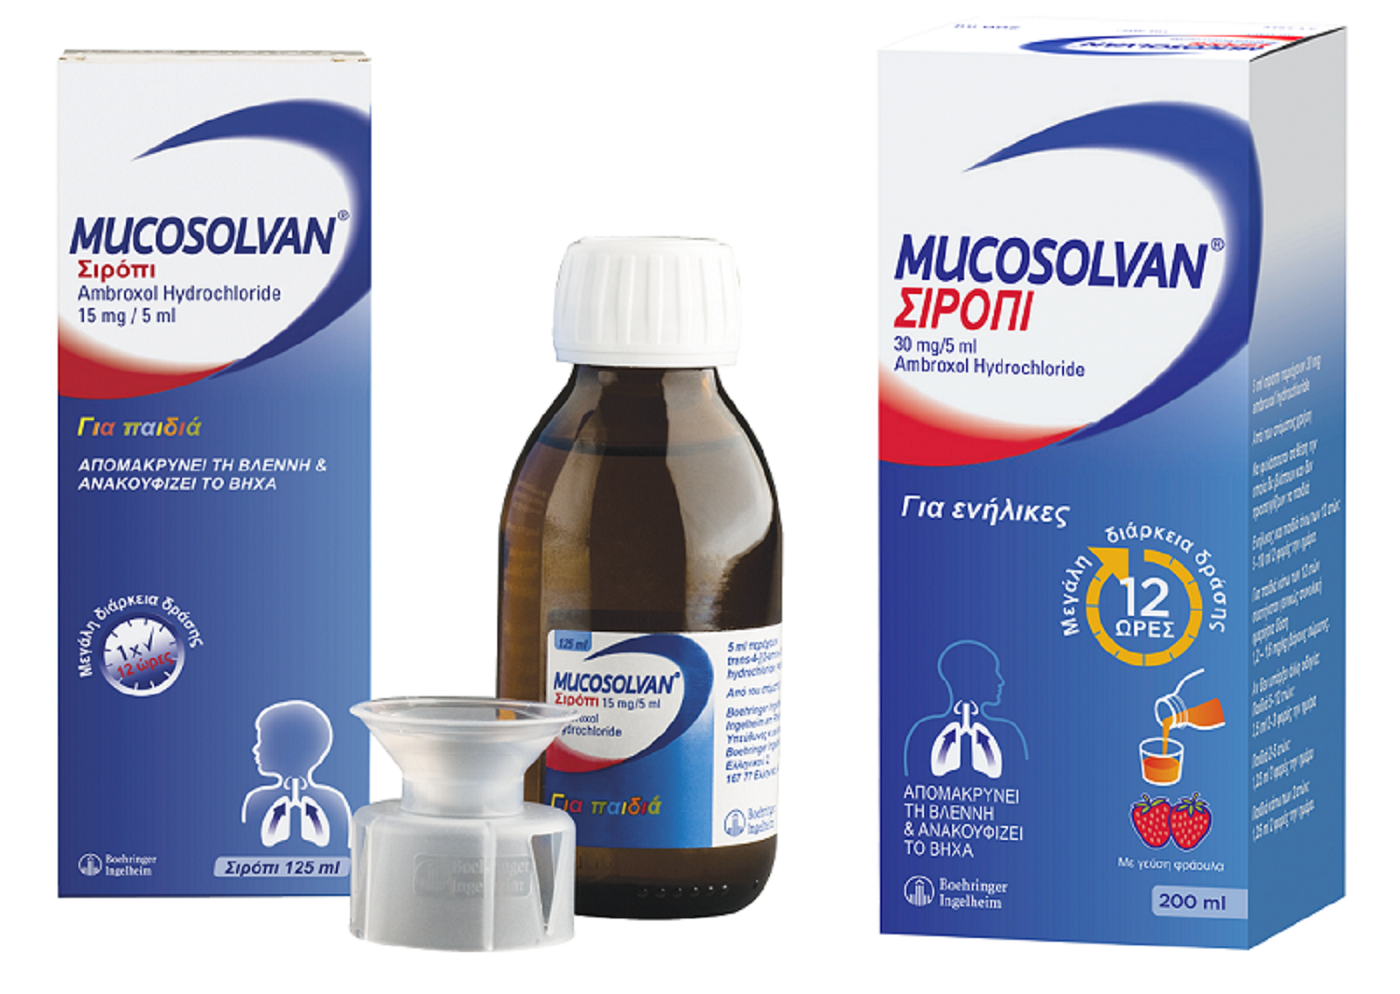 Mucosolvan-paidiko-pack-and-bottle-Sep15